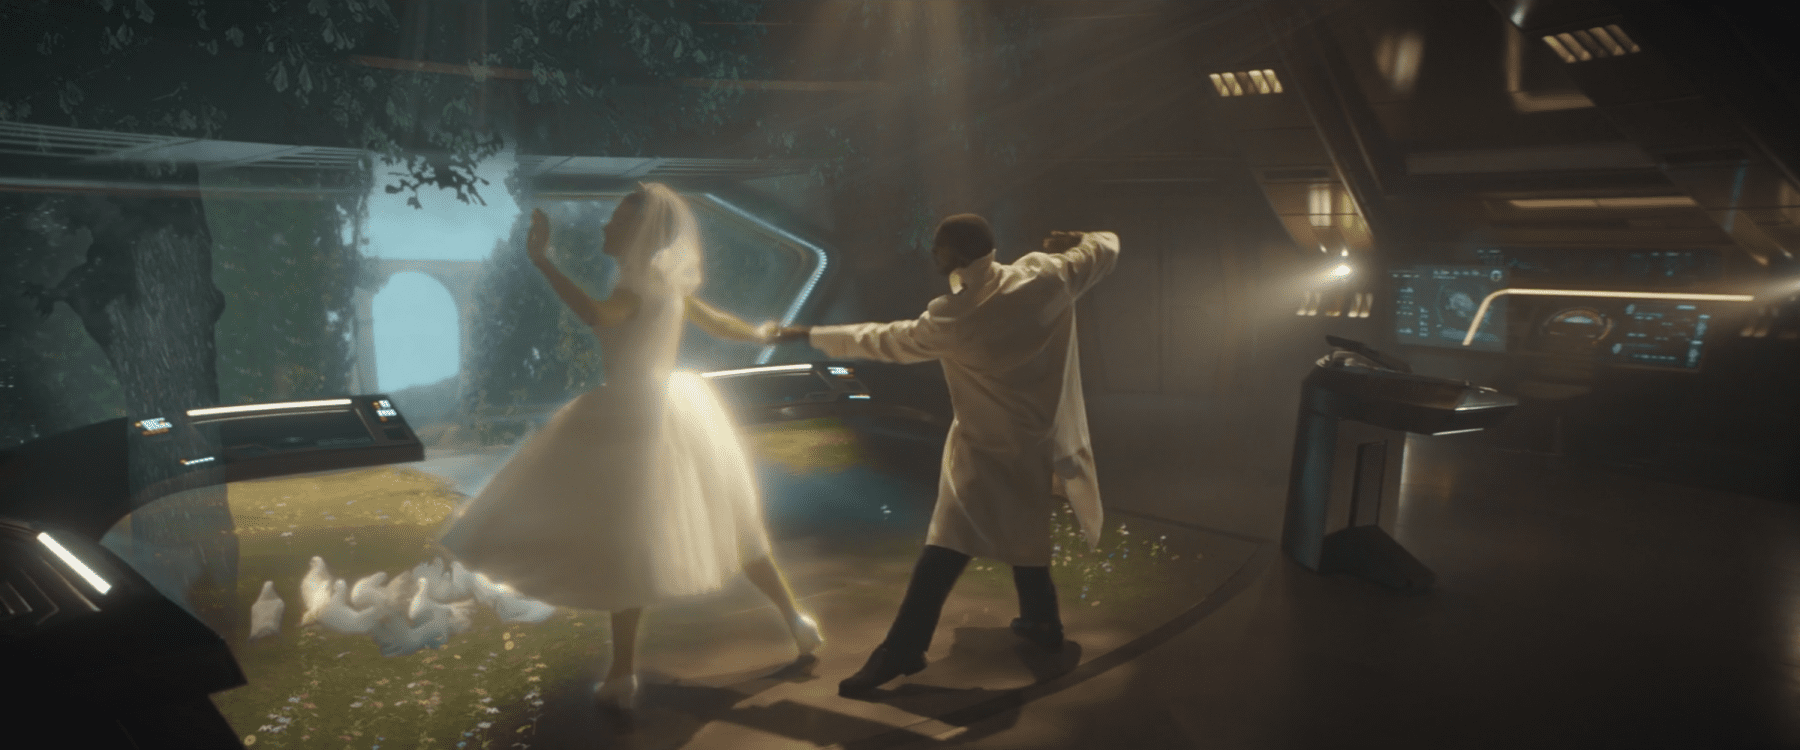 Craft dances with a Zora hologram in Star Trek Discovery's Calypso